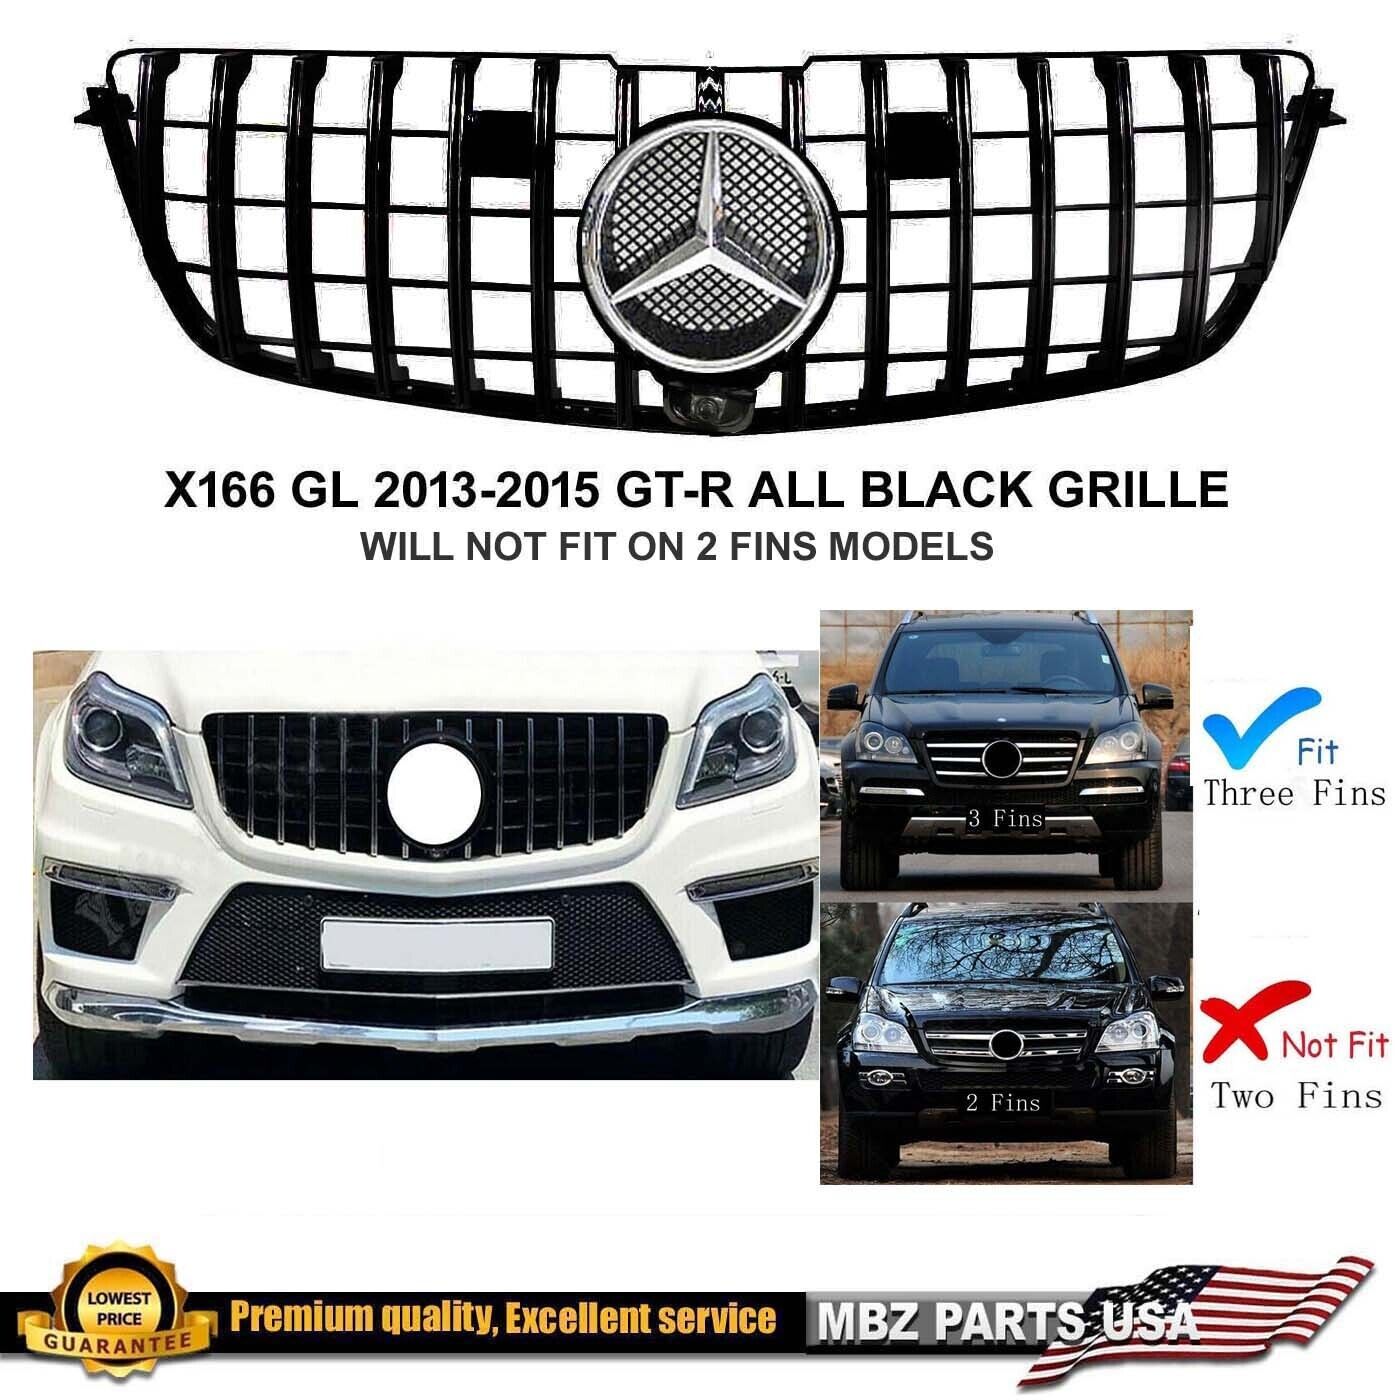 GL350 GL450 X166 Grille GT GTR All Black AMG Style 2013 2014 2015 2016 Star